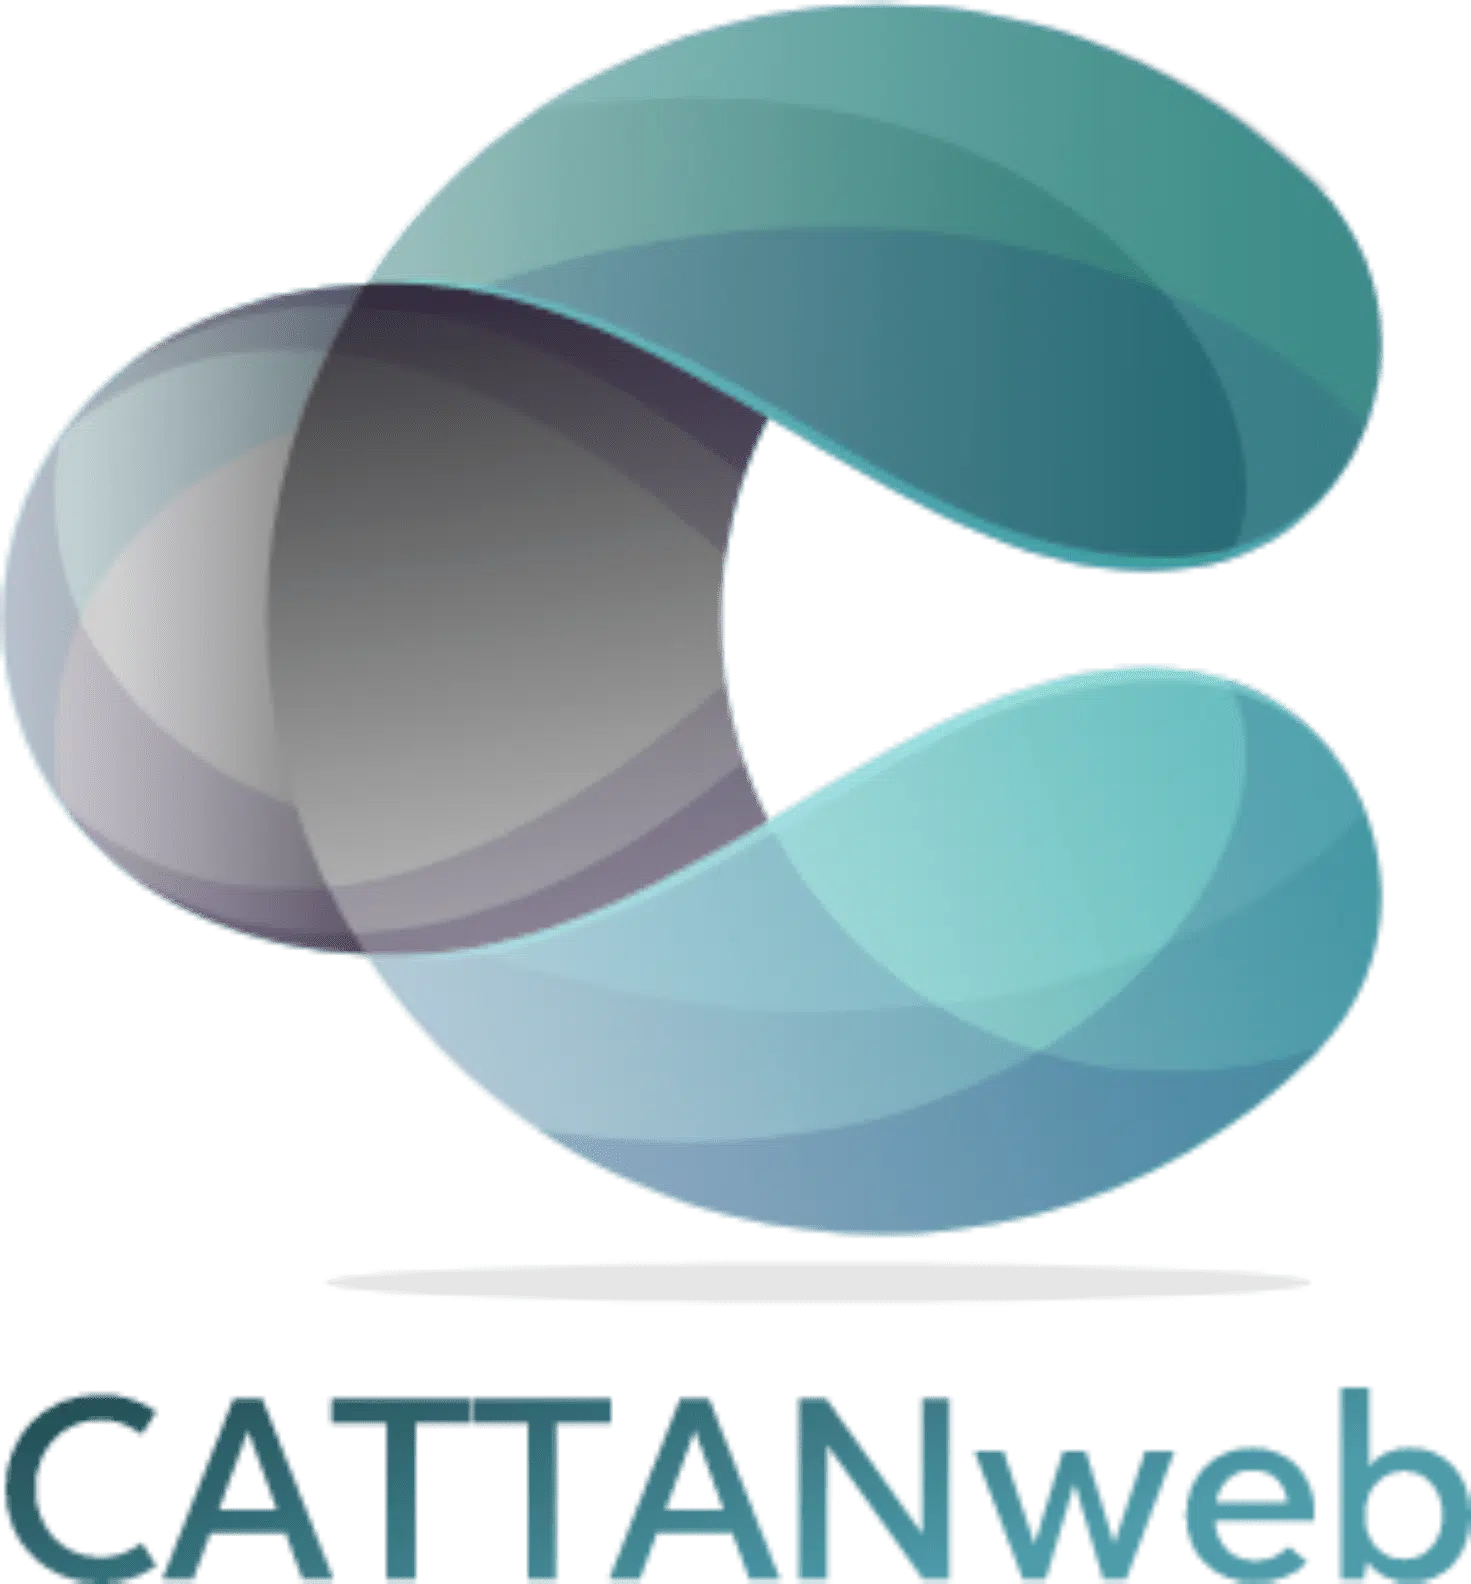 cattanweb logo